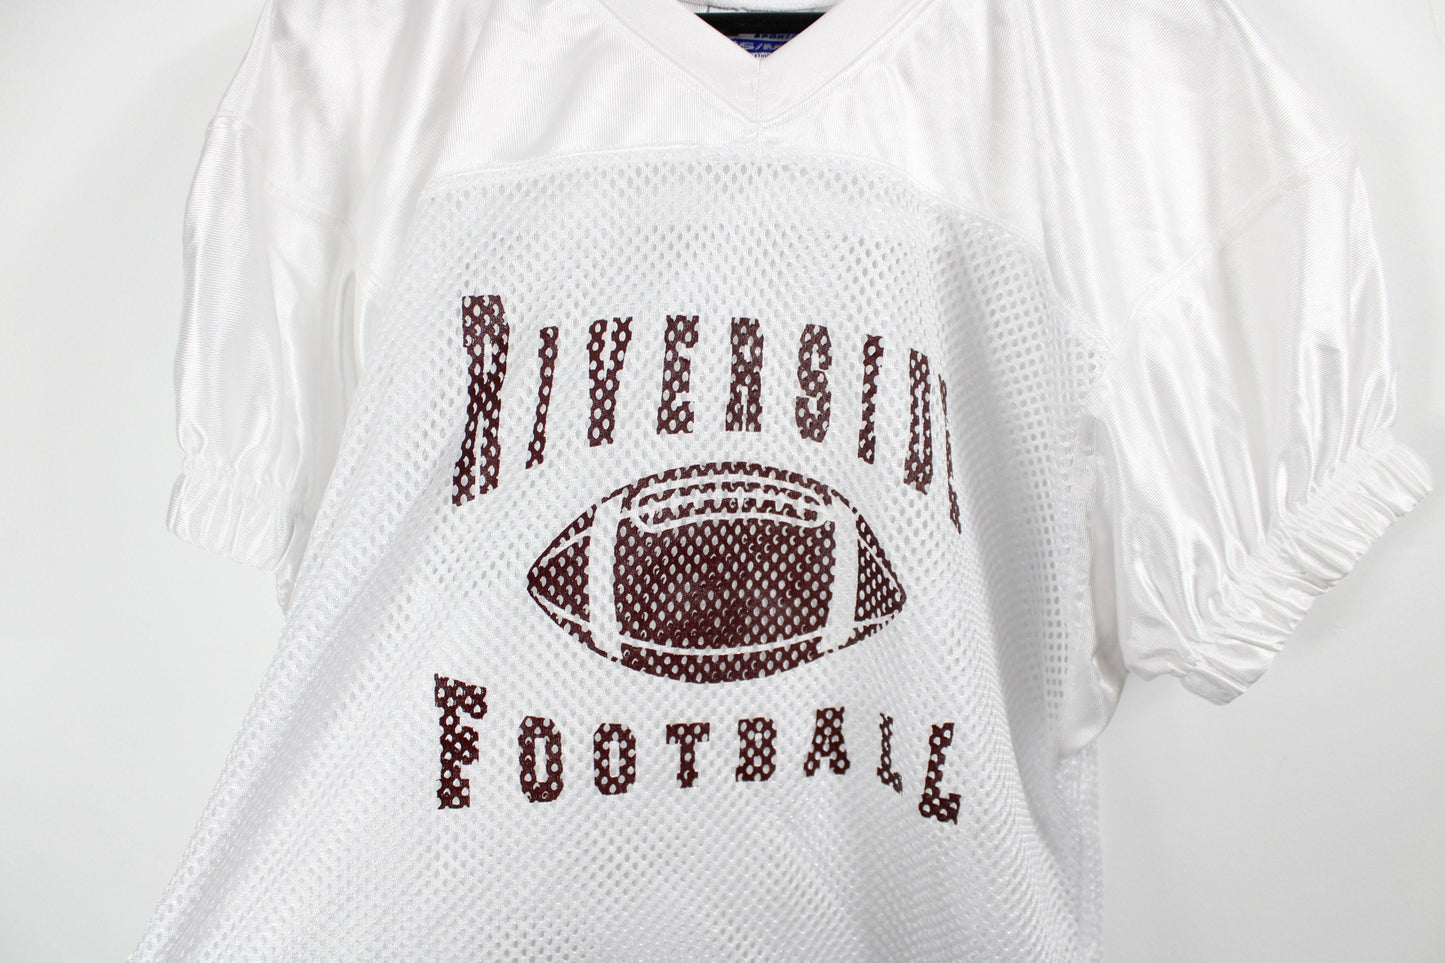 American-Football Jersey / Vintage White Cotton wash Shirt / 90s Sports Team Uniform